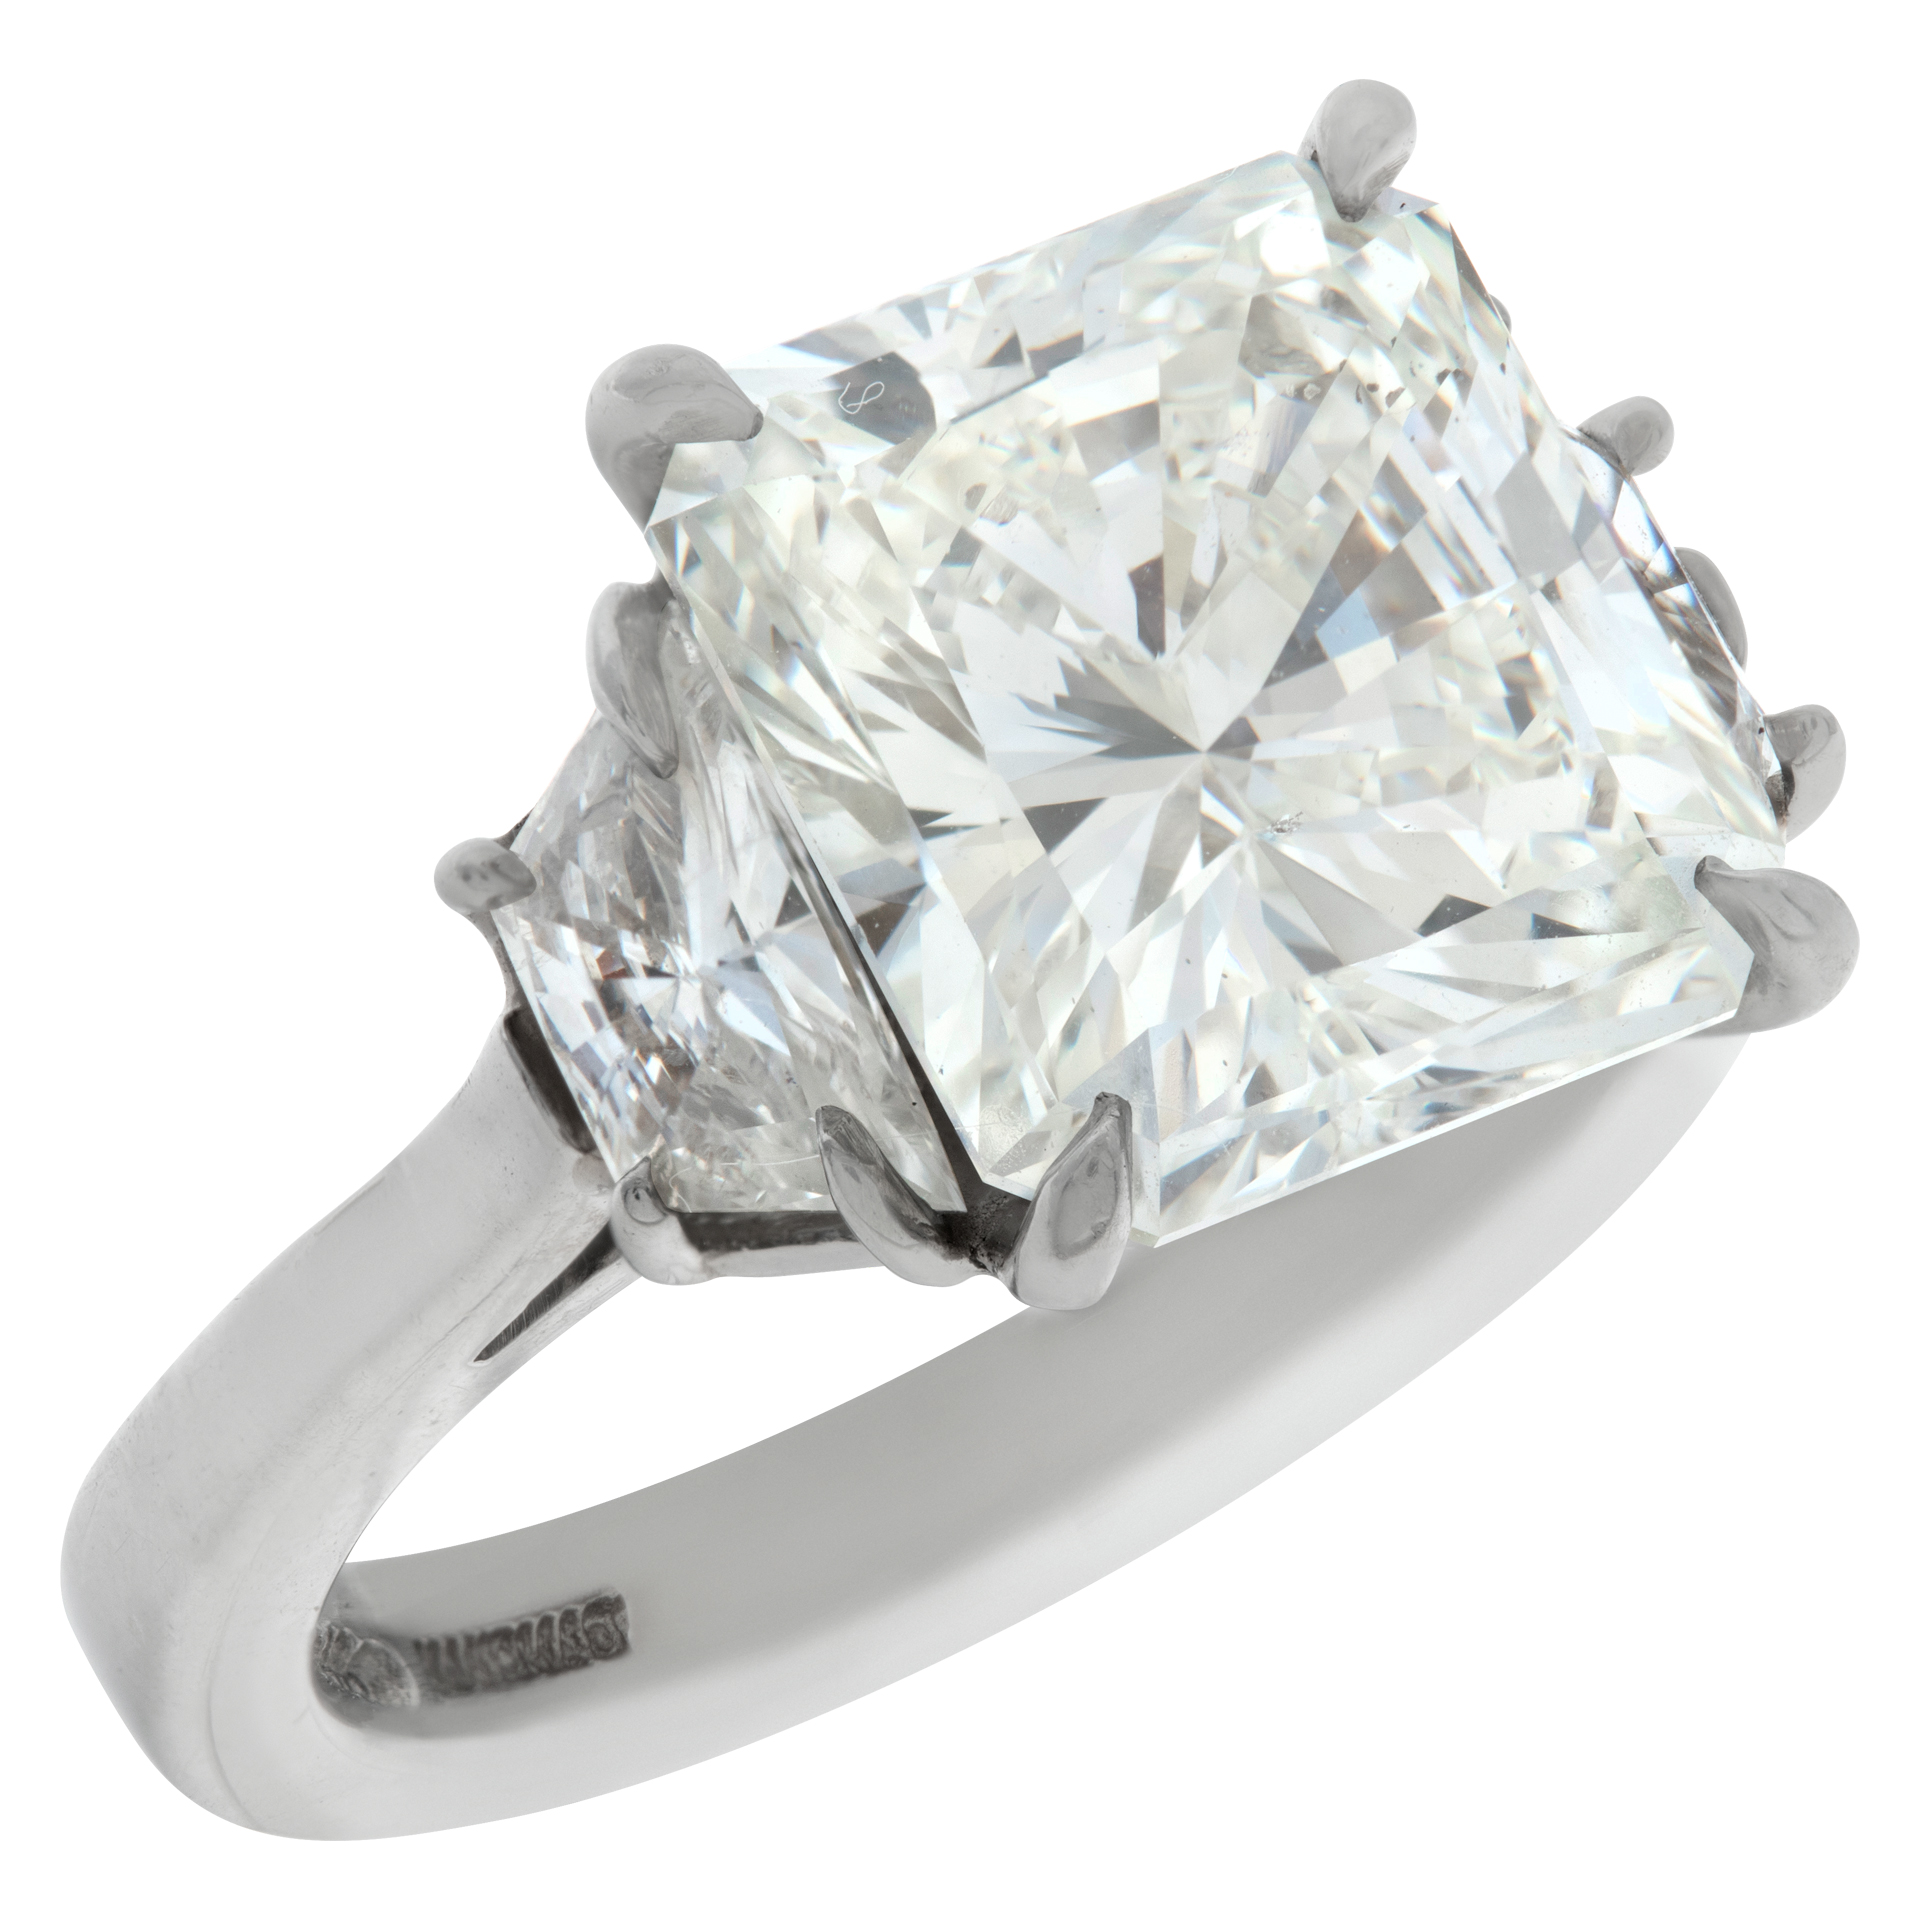 GIA certified cut-cornered rectangular modified brilliant "RADIANT" cut diamond 5.07 carat ( I color, VS2 clarity) ring set in platinum image 3